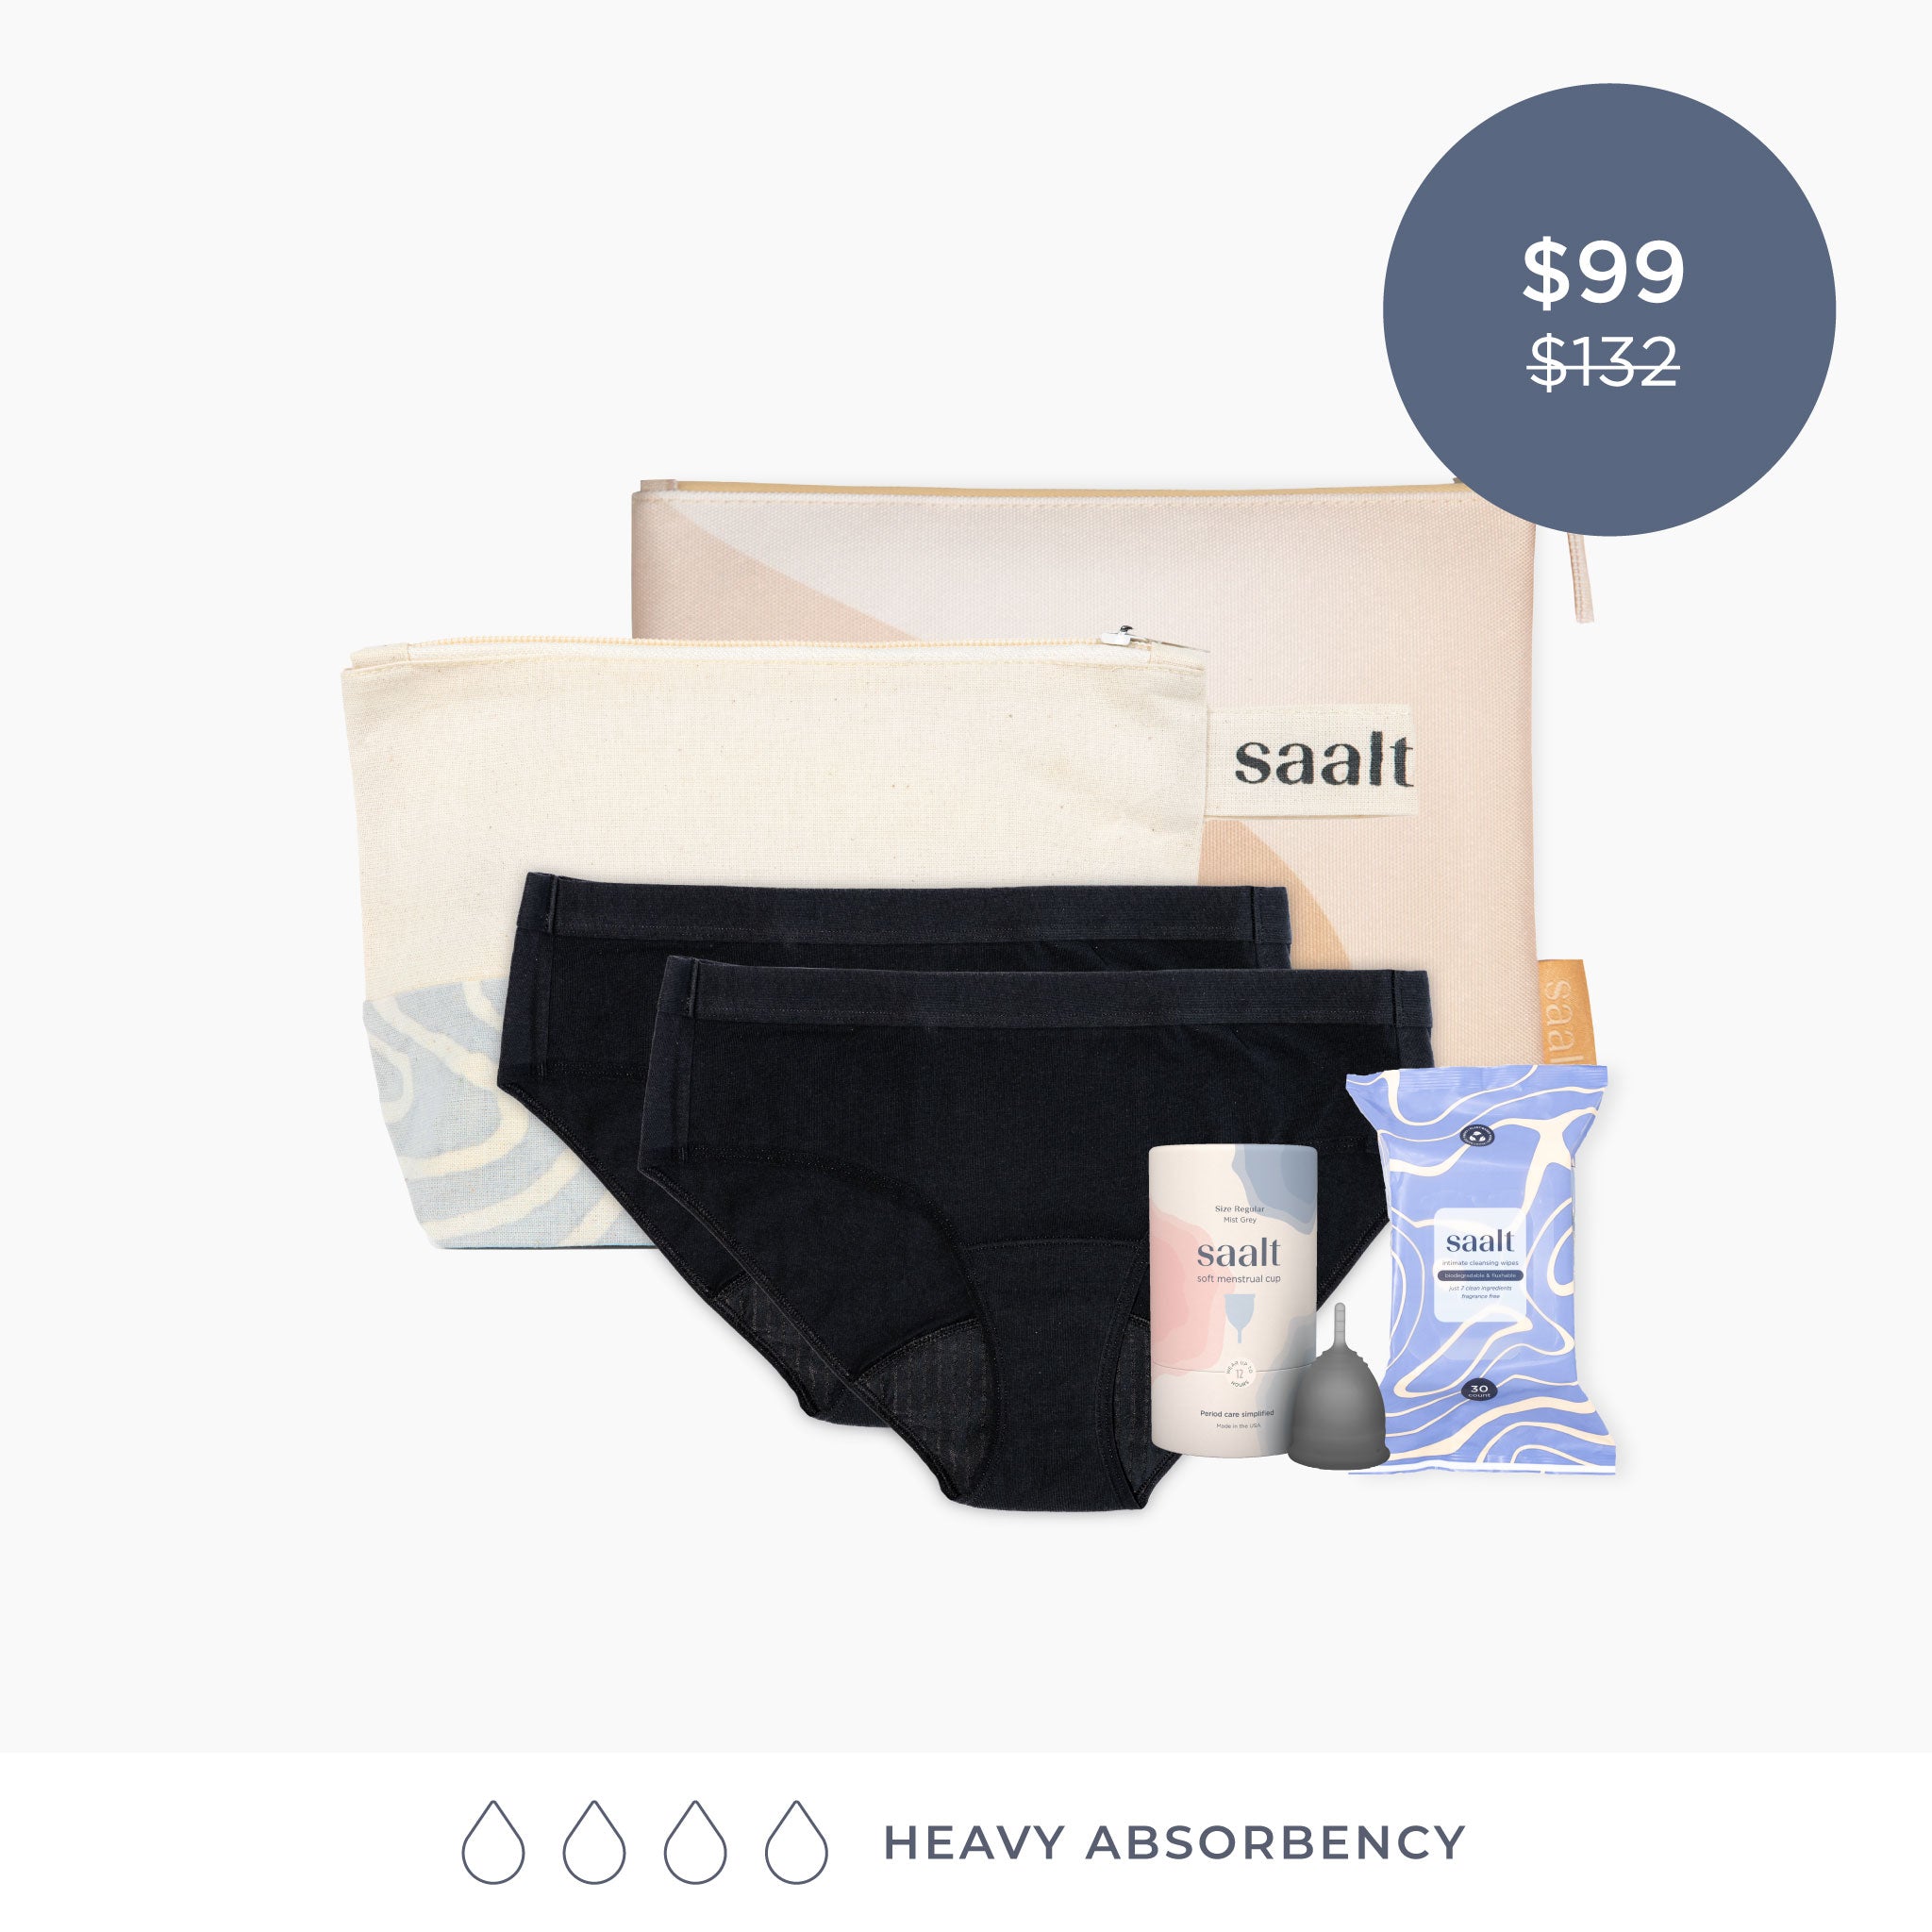  saalt Reusable Period Underwear - Comfortable, Thin